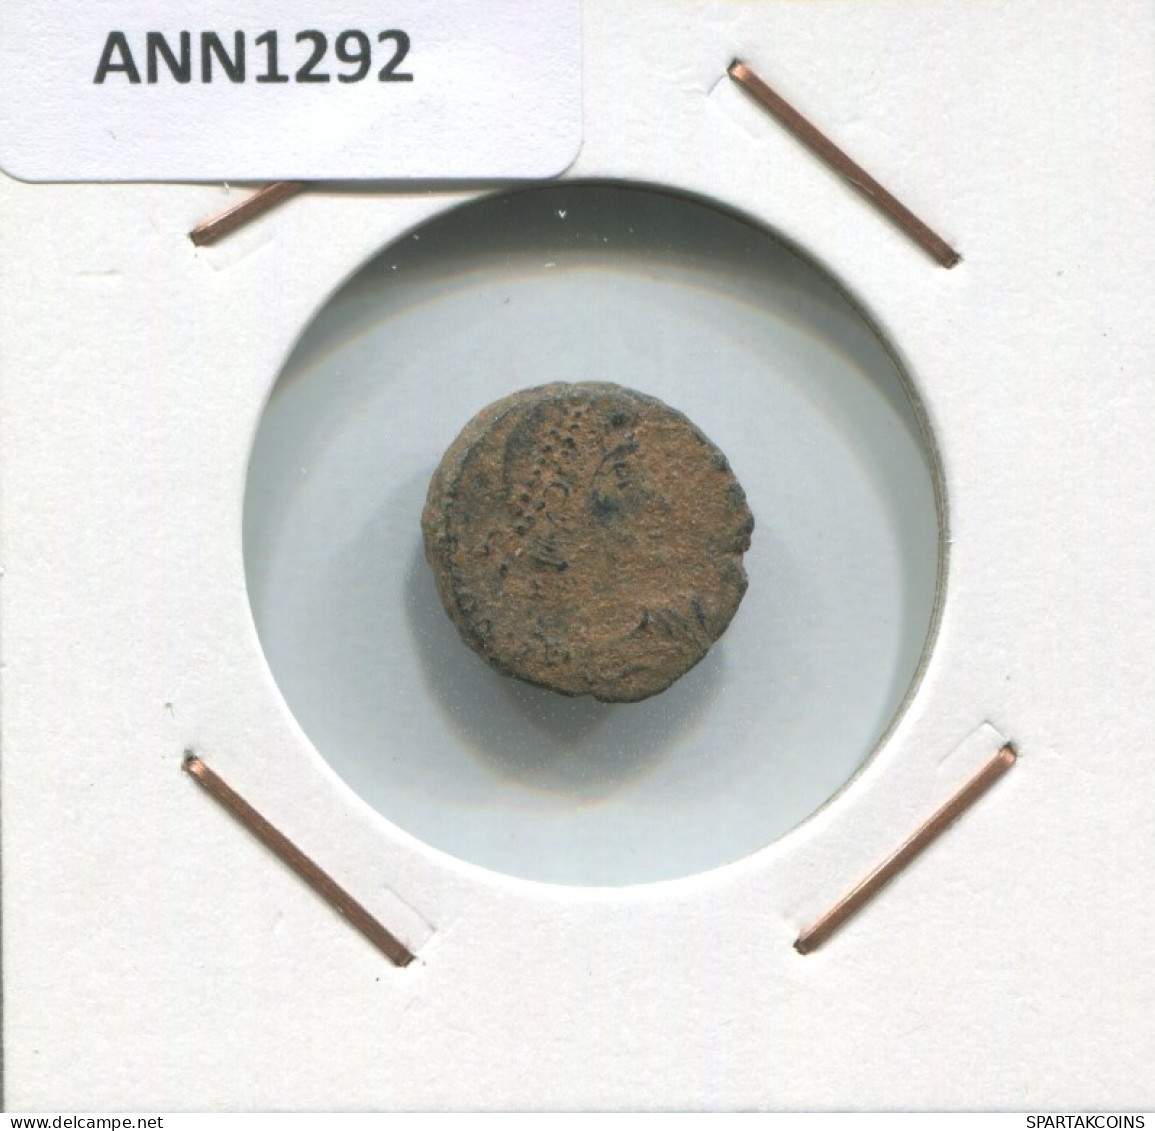 CONSTANTIUS II SISCIA SMAN AD324-337 GLORIA EXERCITVS 1.9g/14mm #ANN1292.9.U.A - The Christian Empire (307 AD To 363 AD)